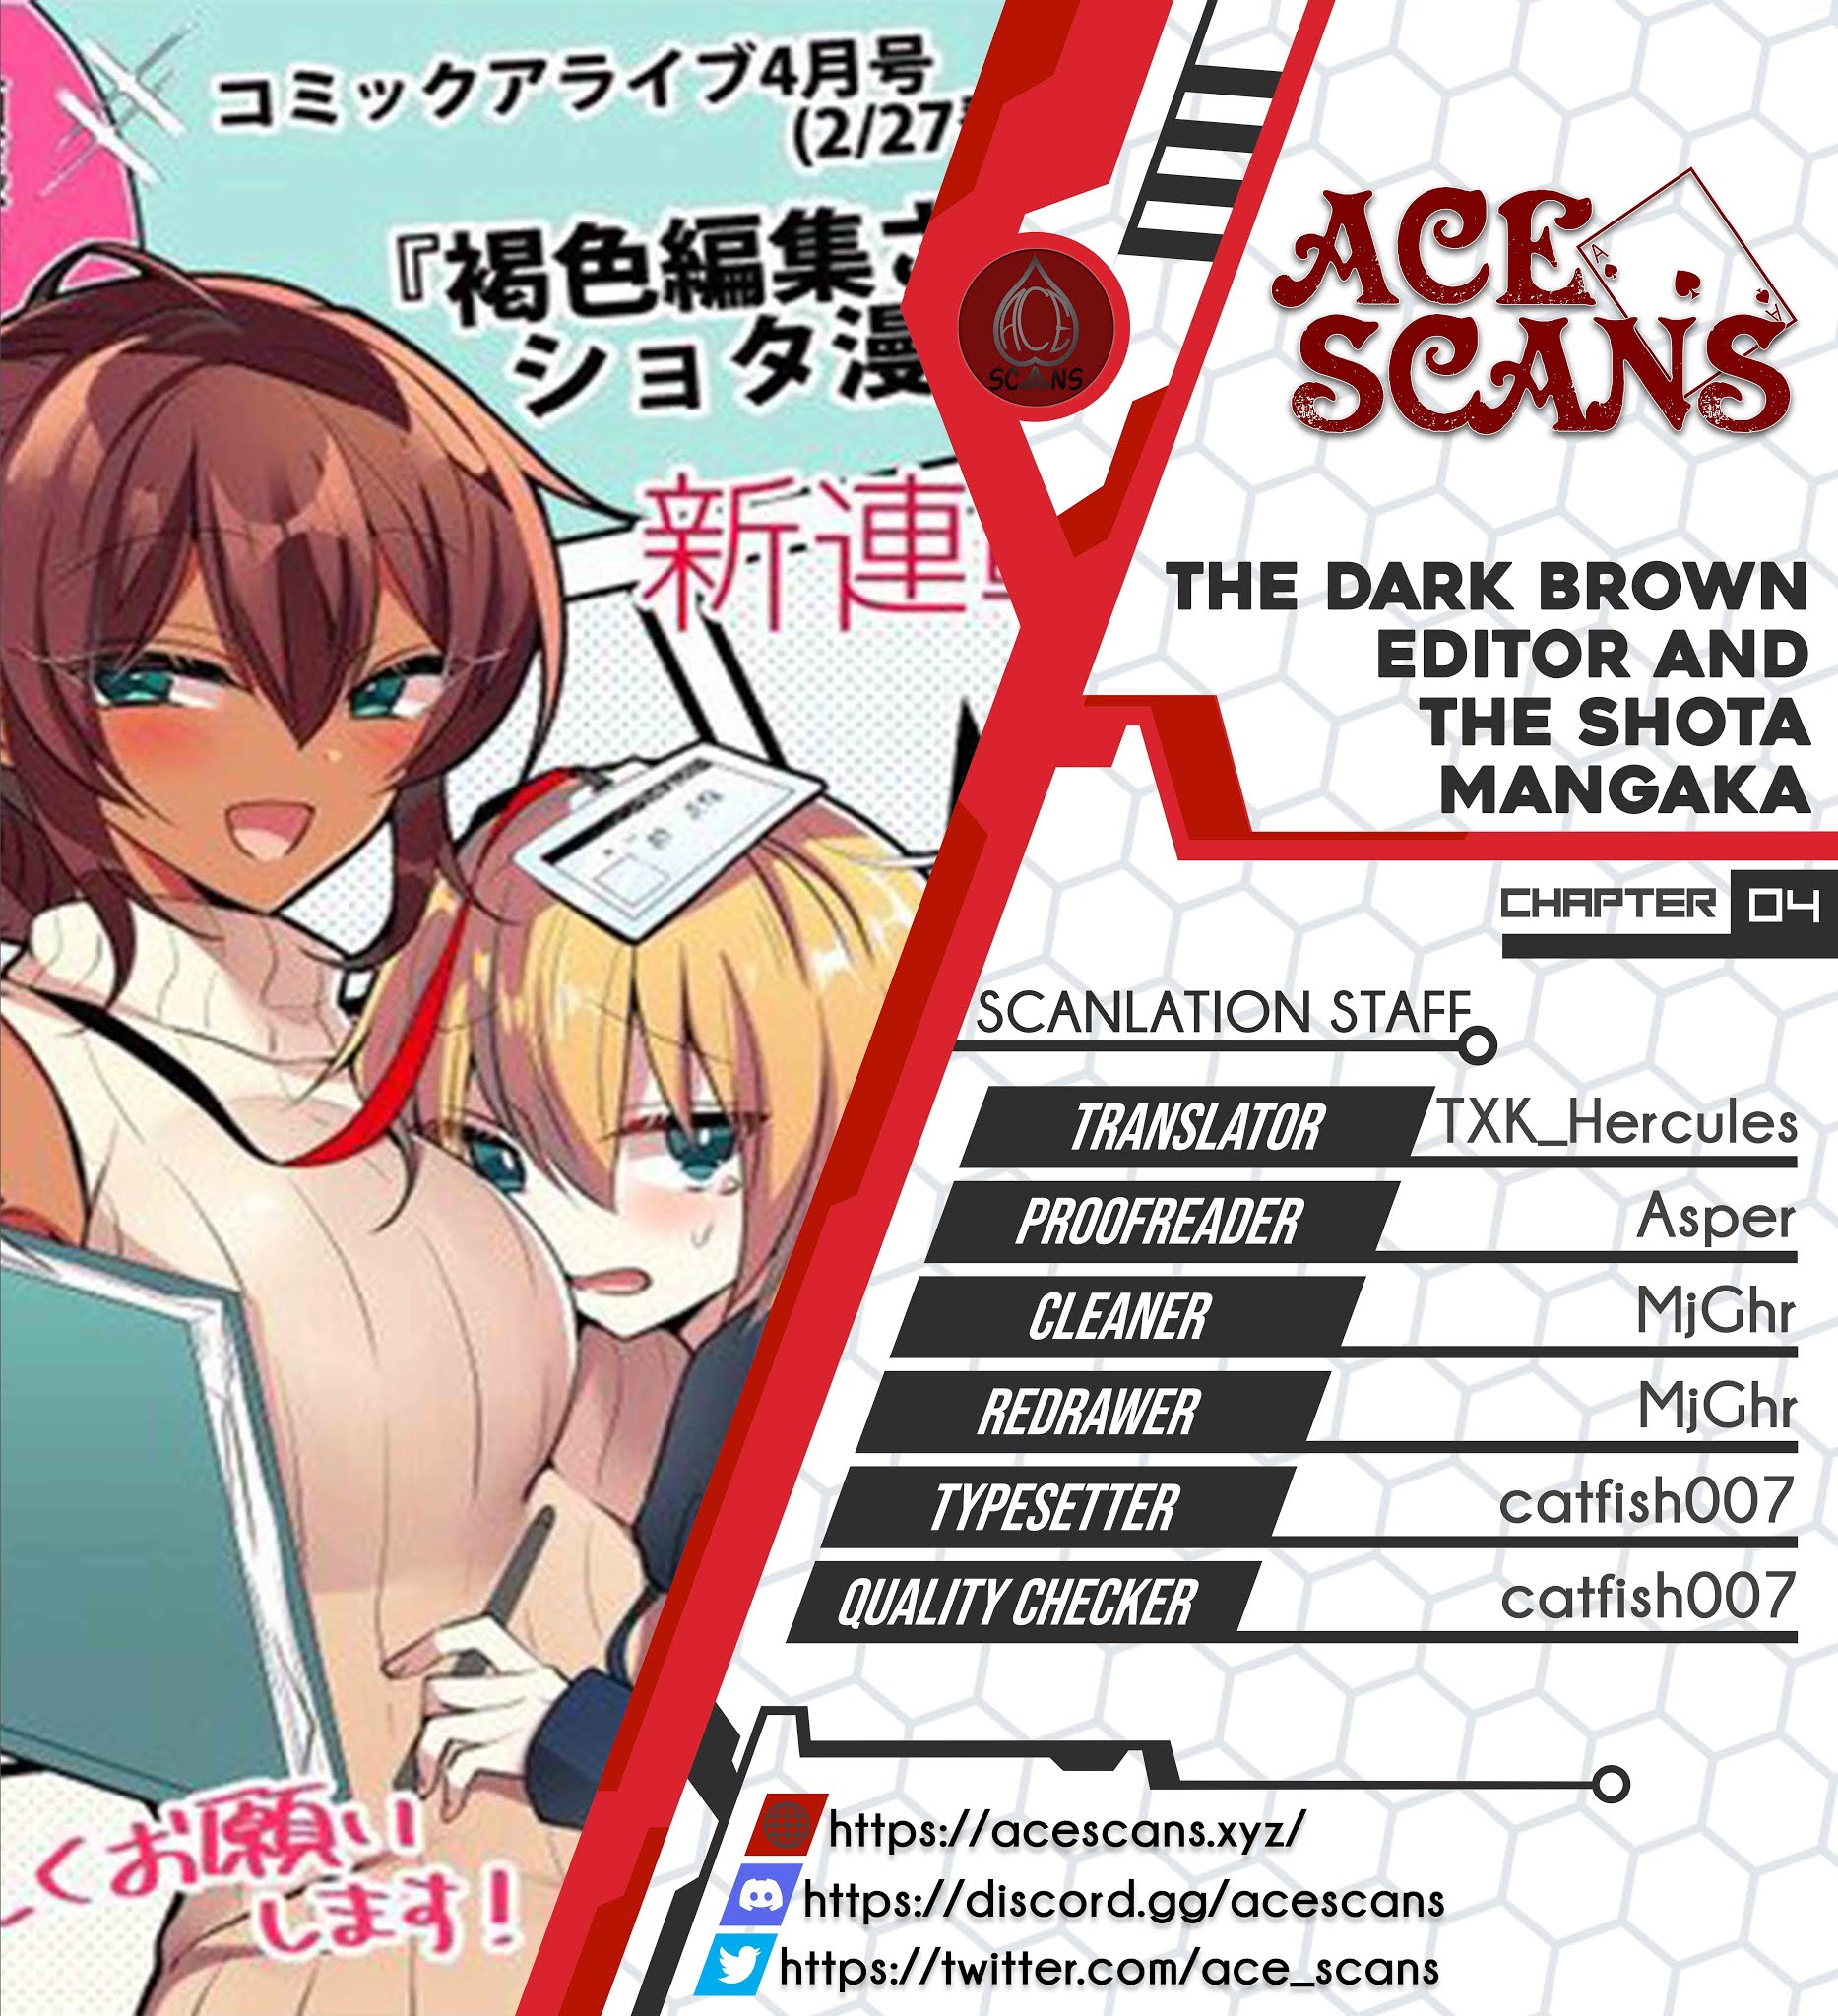 The Dark Brown Editor And The Shota Mangaka - Page 1